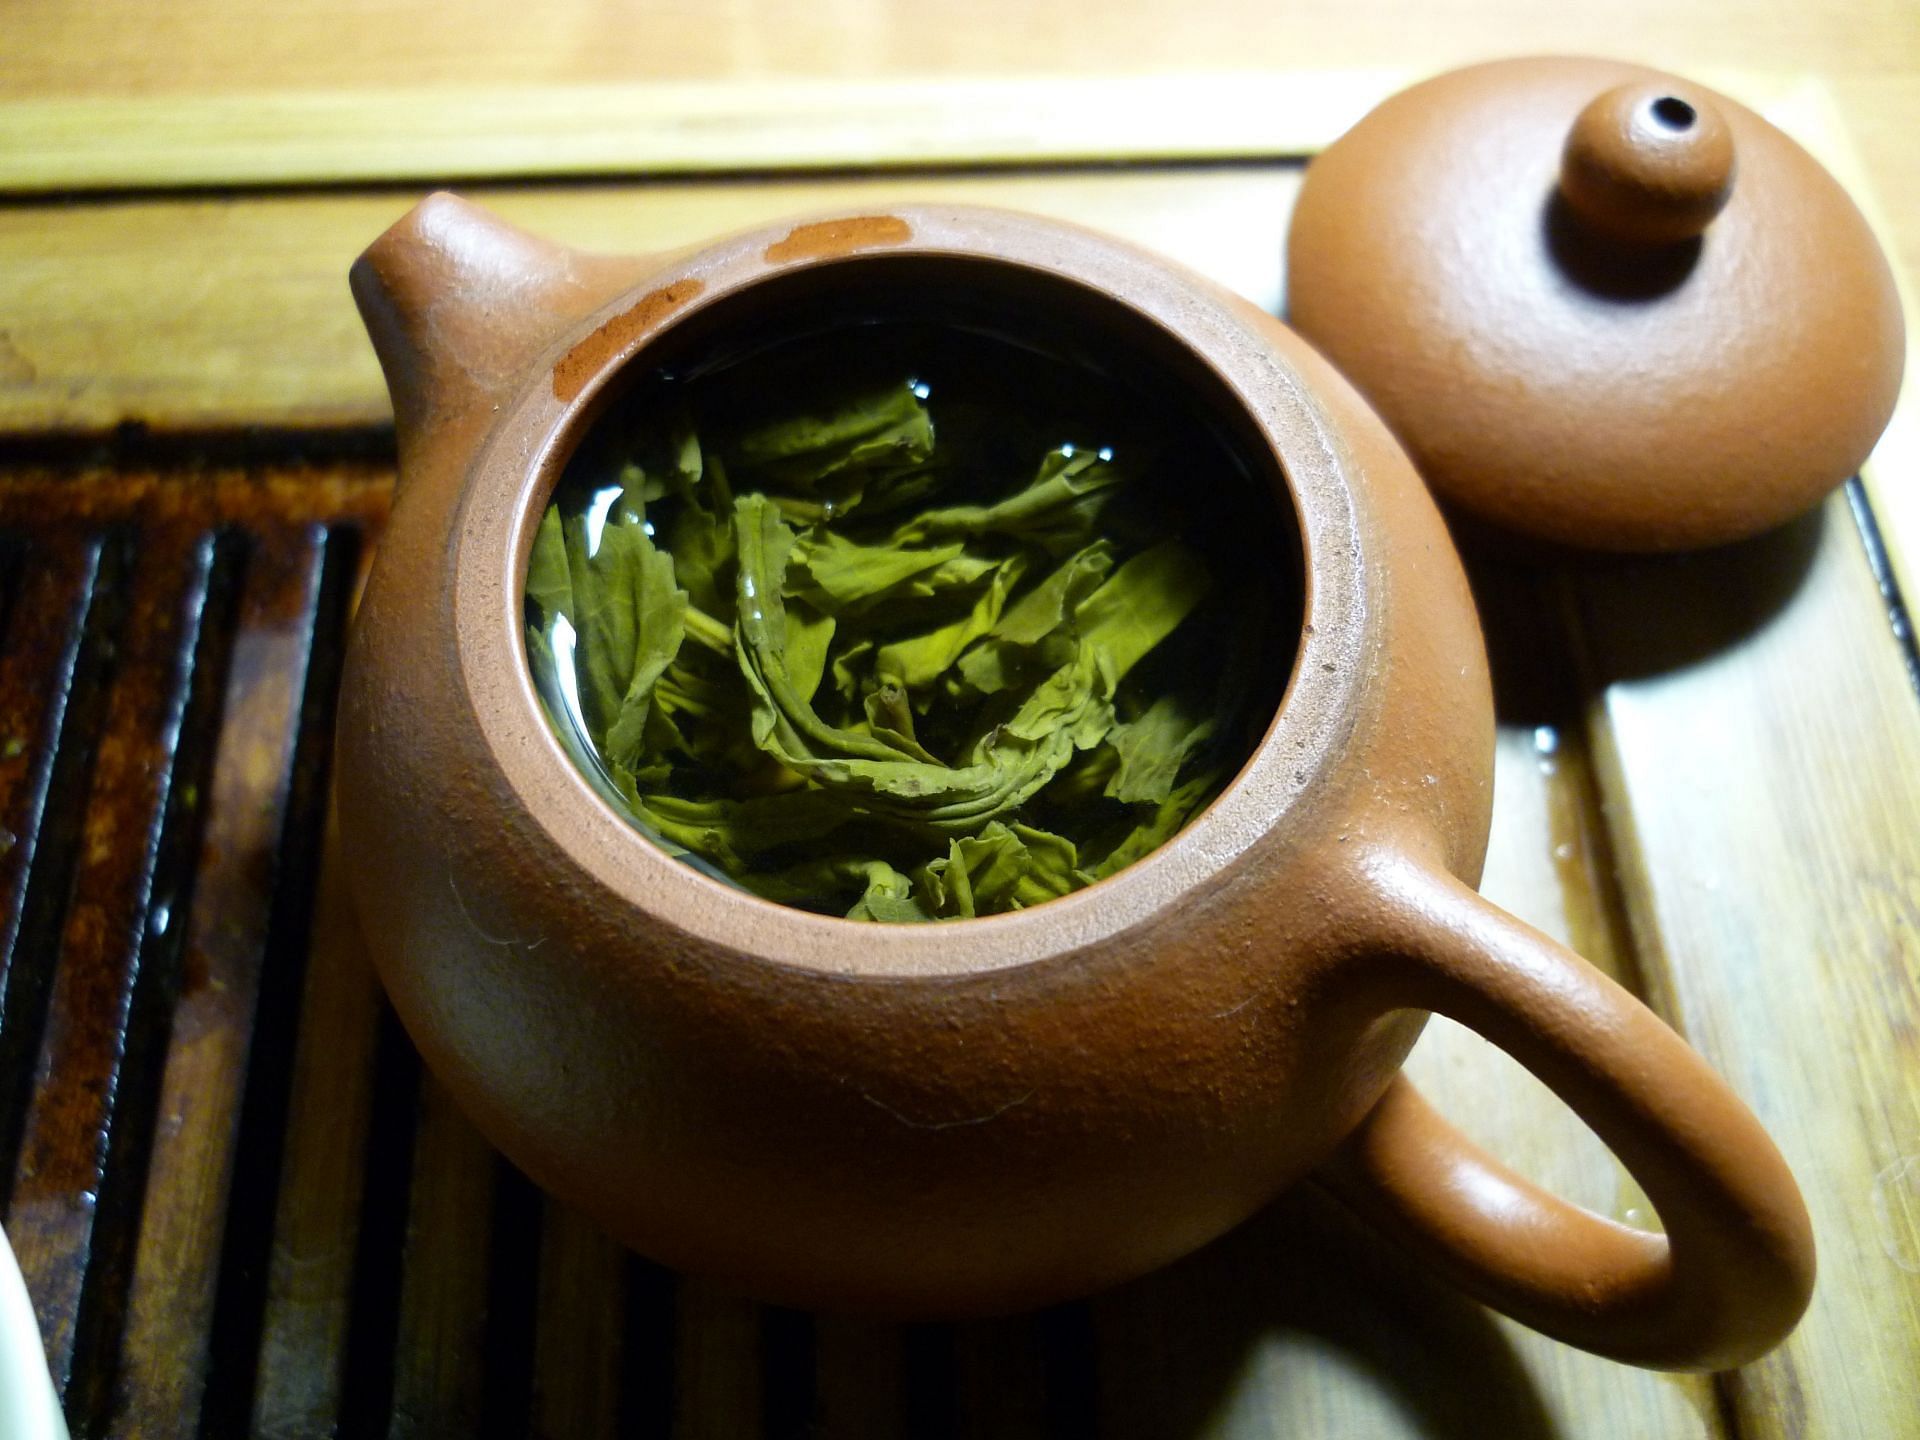 Soursop leaves can be used to make tea (Image via Unsplash/Arseniy Kapran)